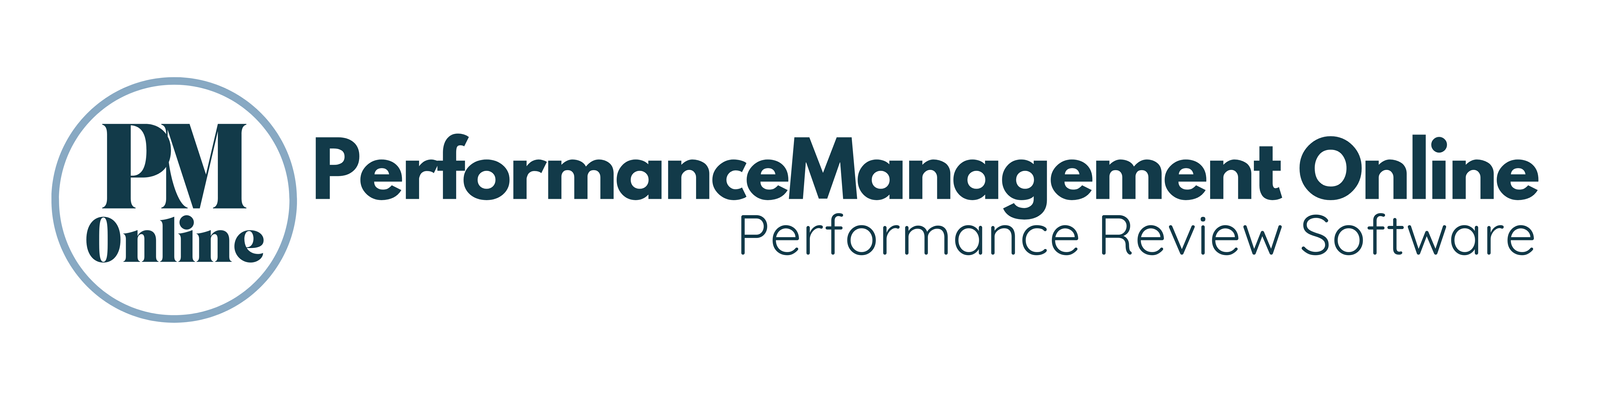 Performance Management Online